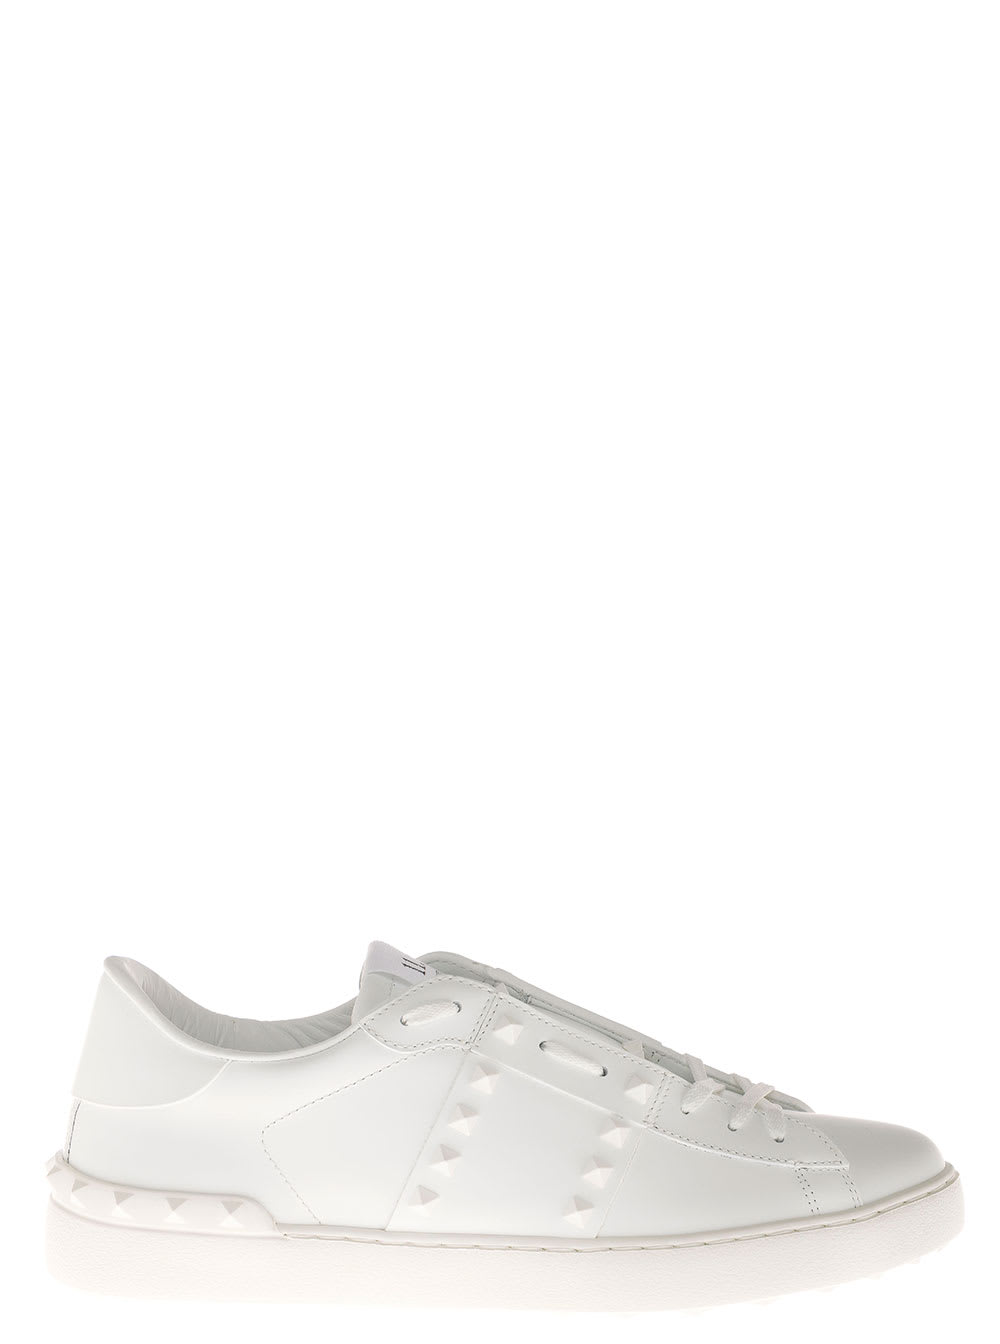 Valentino Garavani Rockstud White Leather Sneakers